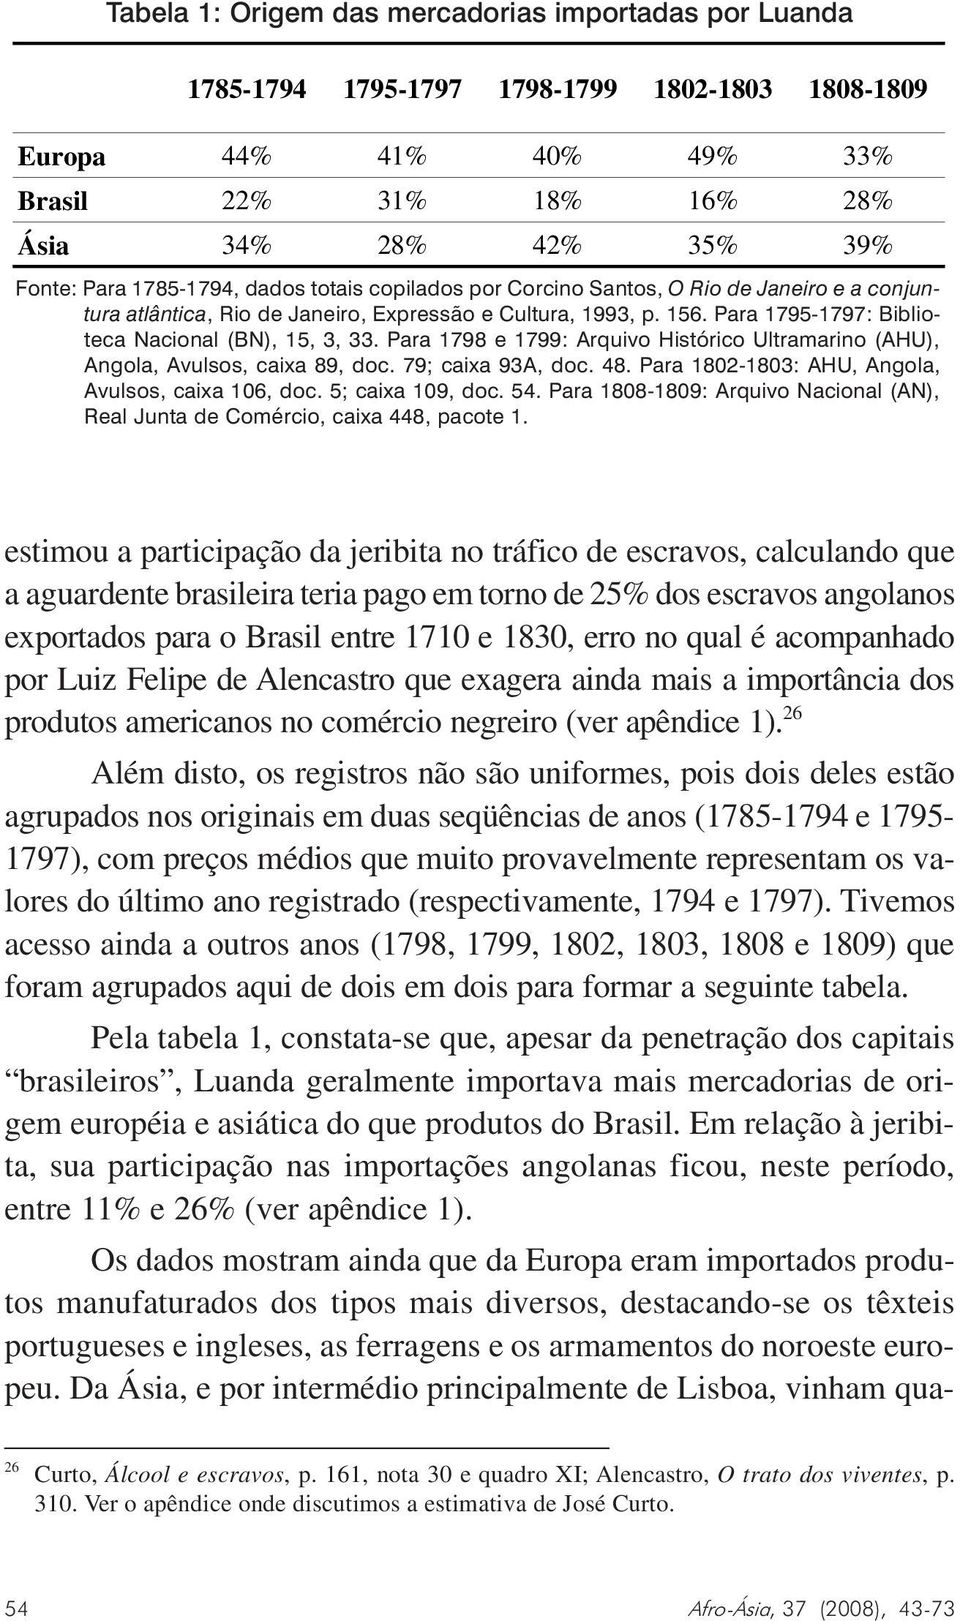 Para 1798 e 1799: Arquivo Histórico Ultramarino (AHU), Angola, Avulsos, caixa 89, doc. 79; caixa 93A, doc. 48. Para 1802-1803: AHU, Angola, Avulsos, caixa 106, doc. 5; caixa 109, doc. 54.